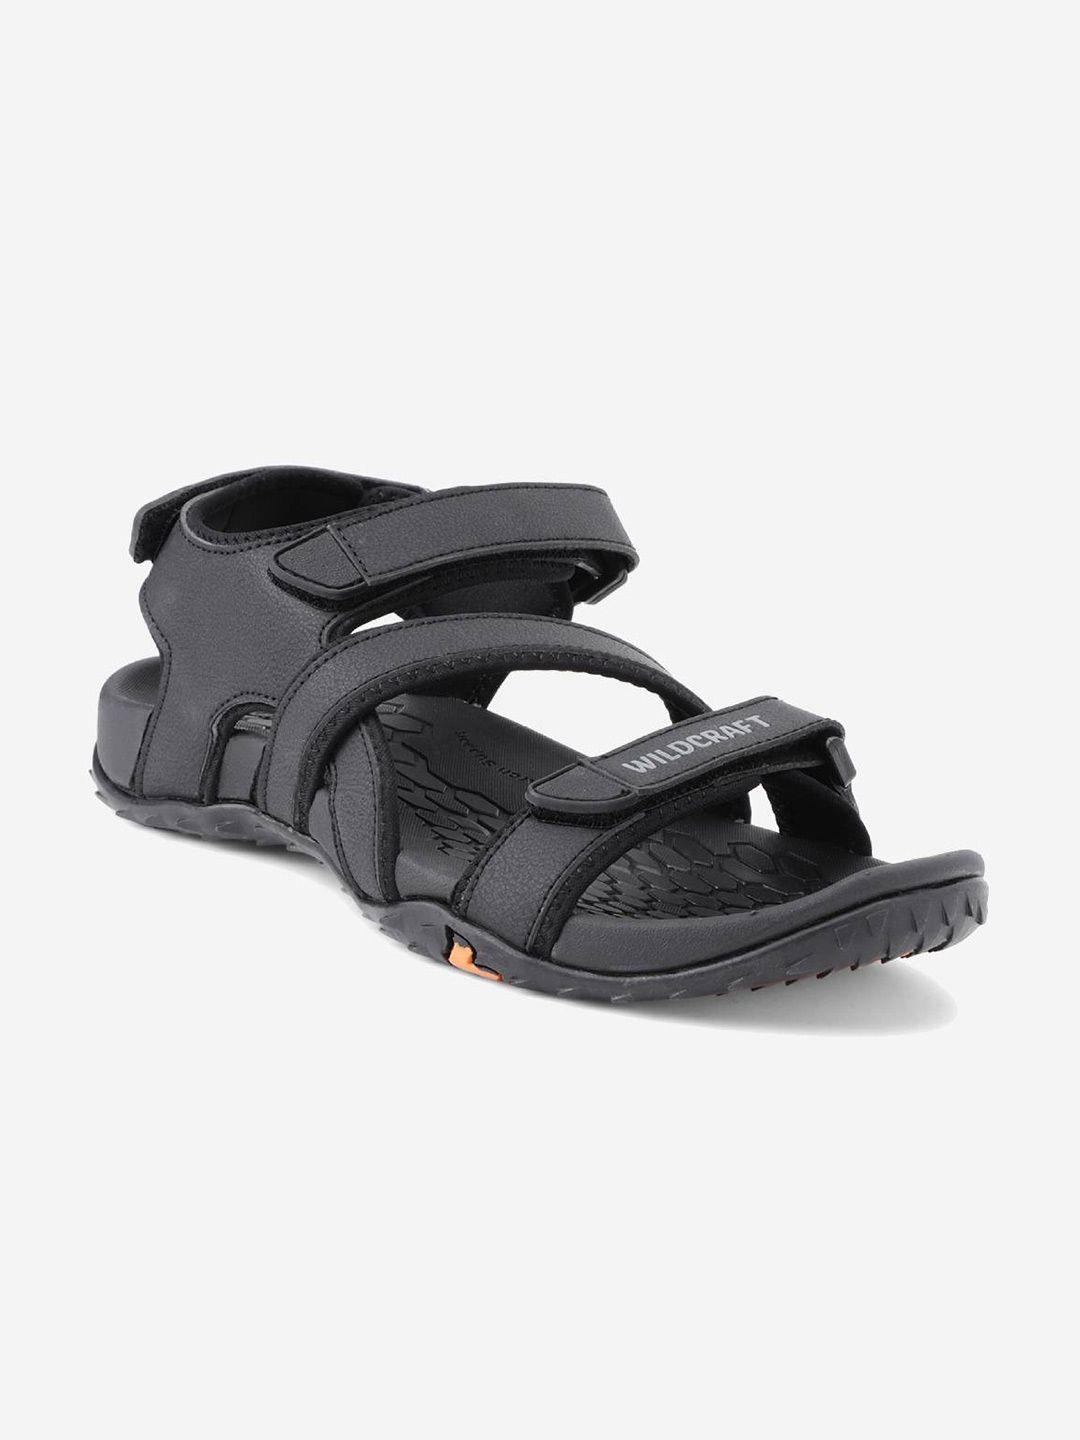 wildcraft-zemu+-men-textured-sports-sandals